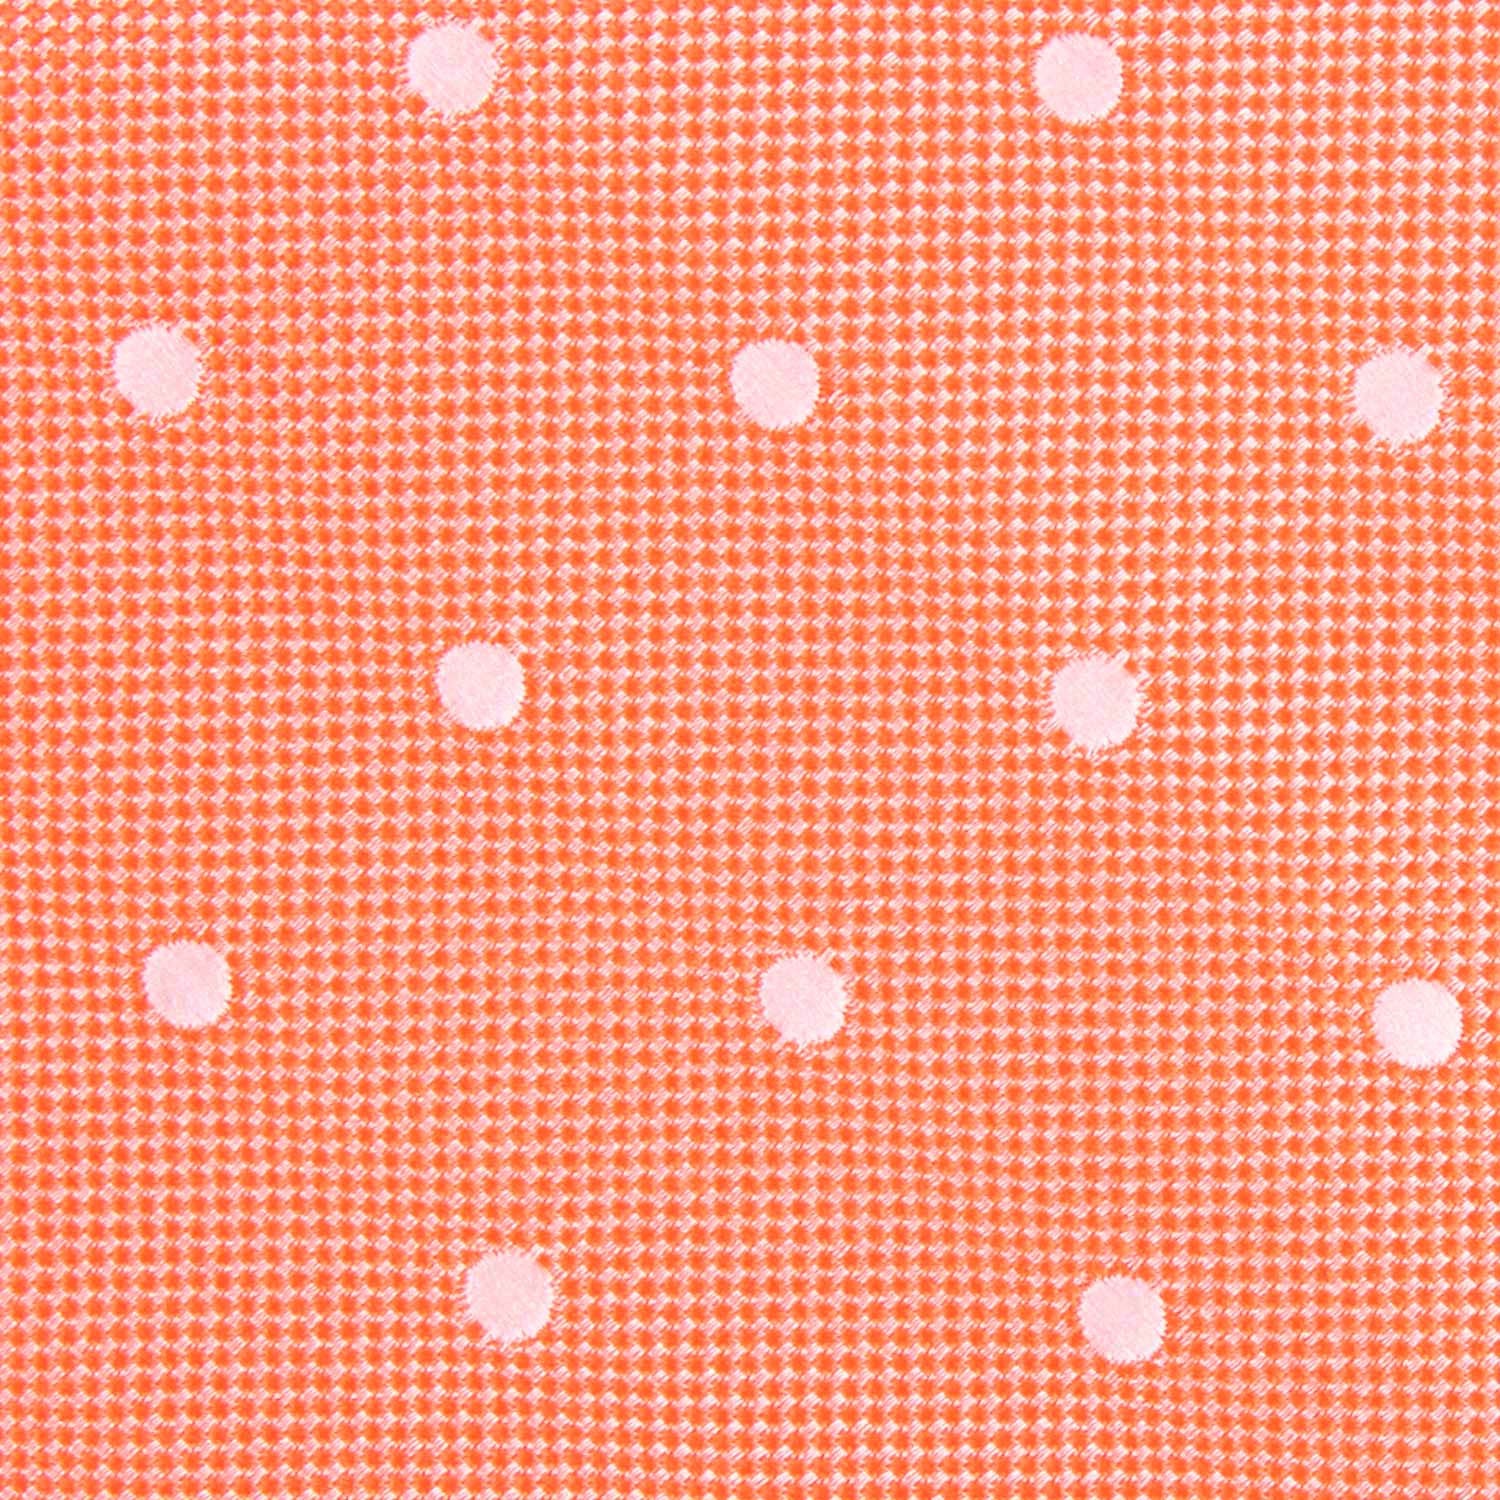 Coral Orange with White Polka Dots Fabric Necktie M142